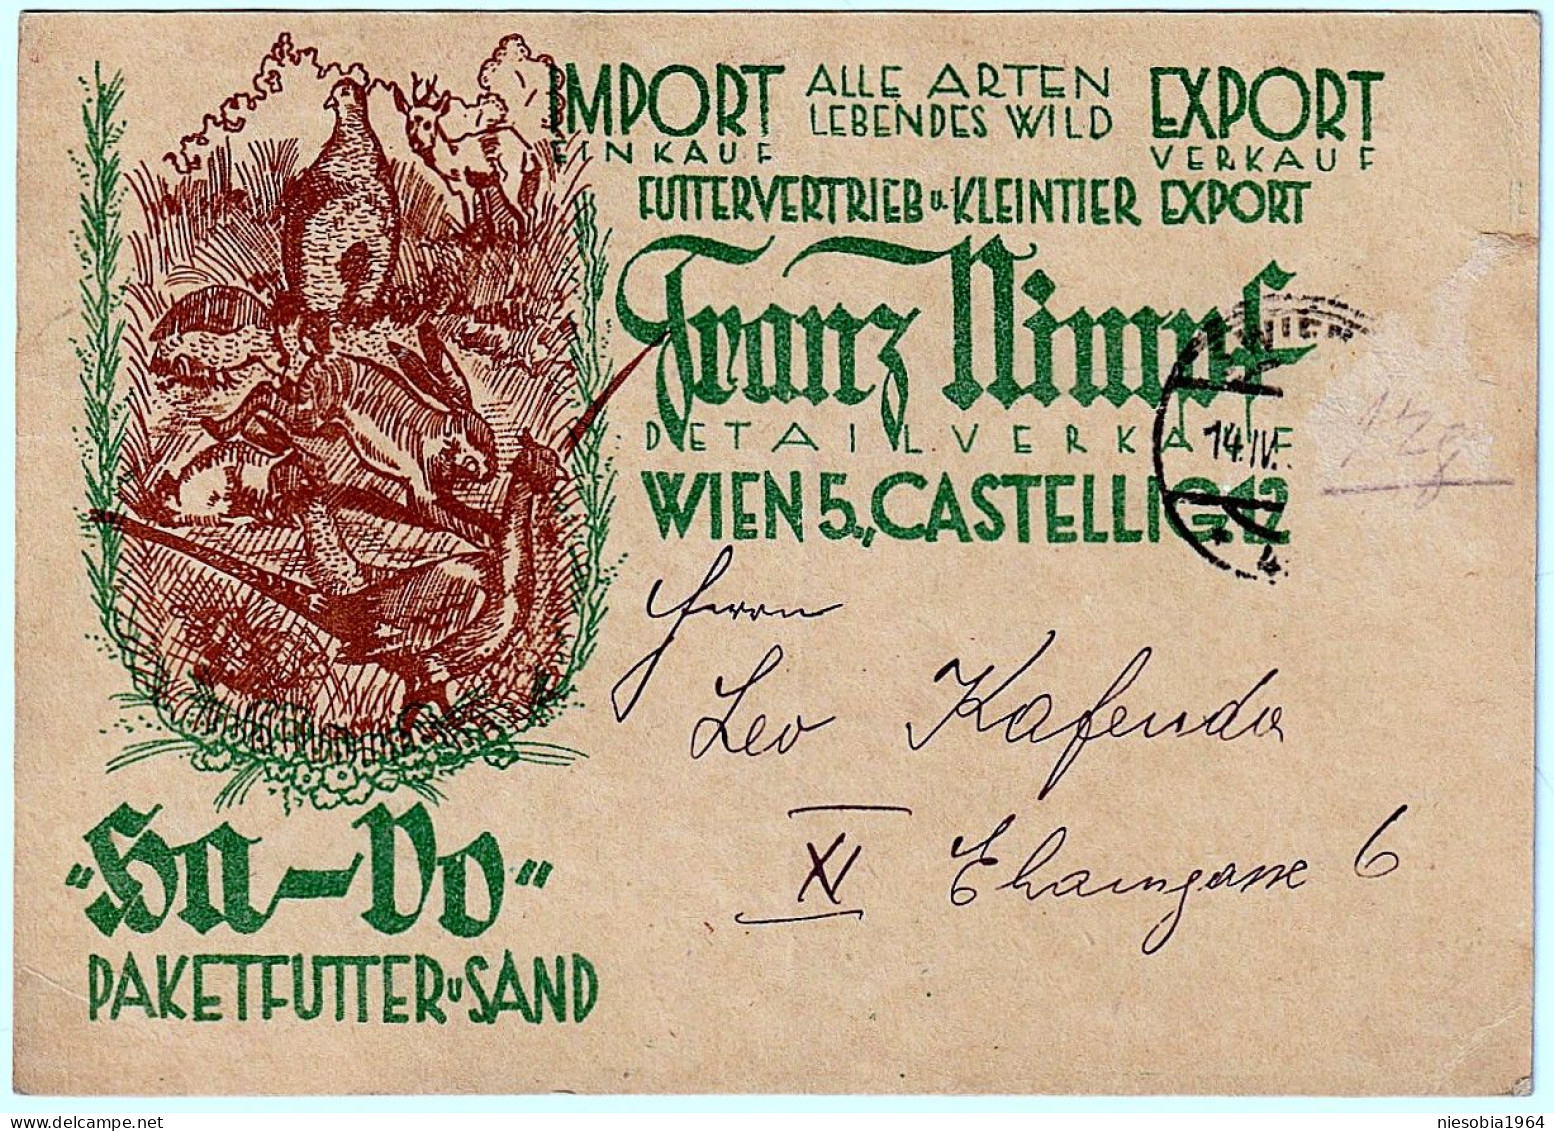 Franz Nimpf Wien Pet Shop Advertising Postkarte 14 IV 1934 - Tarjetas